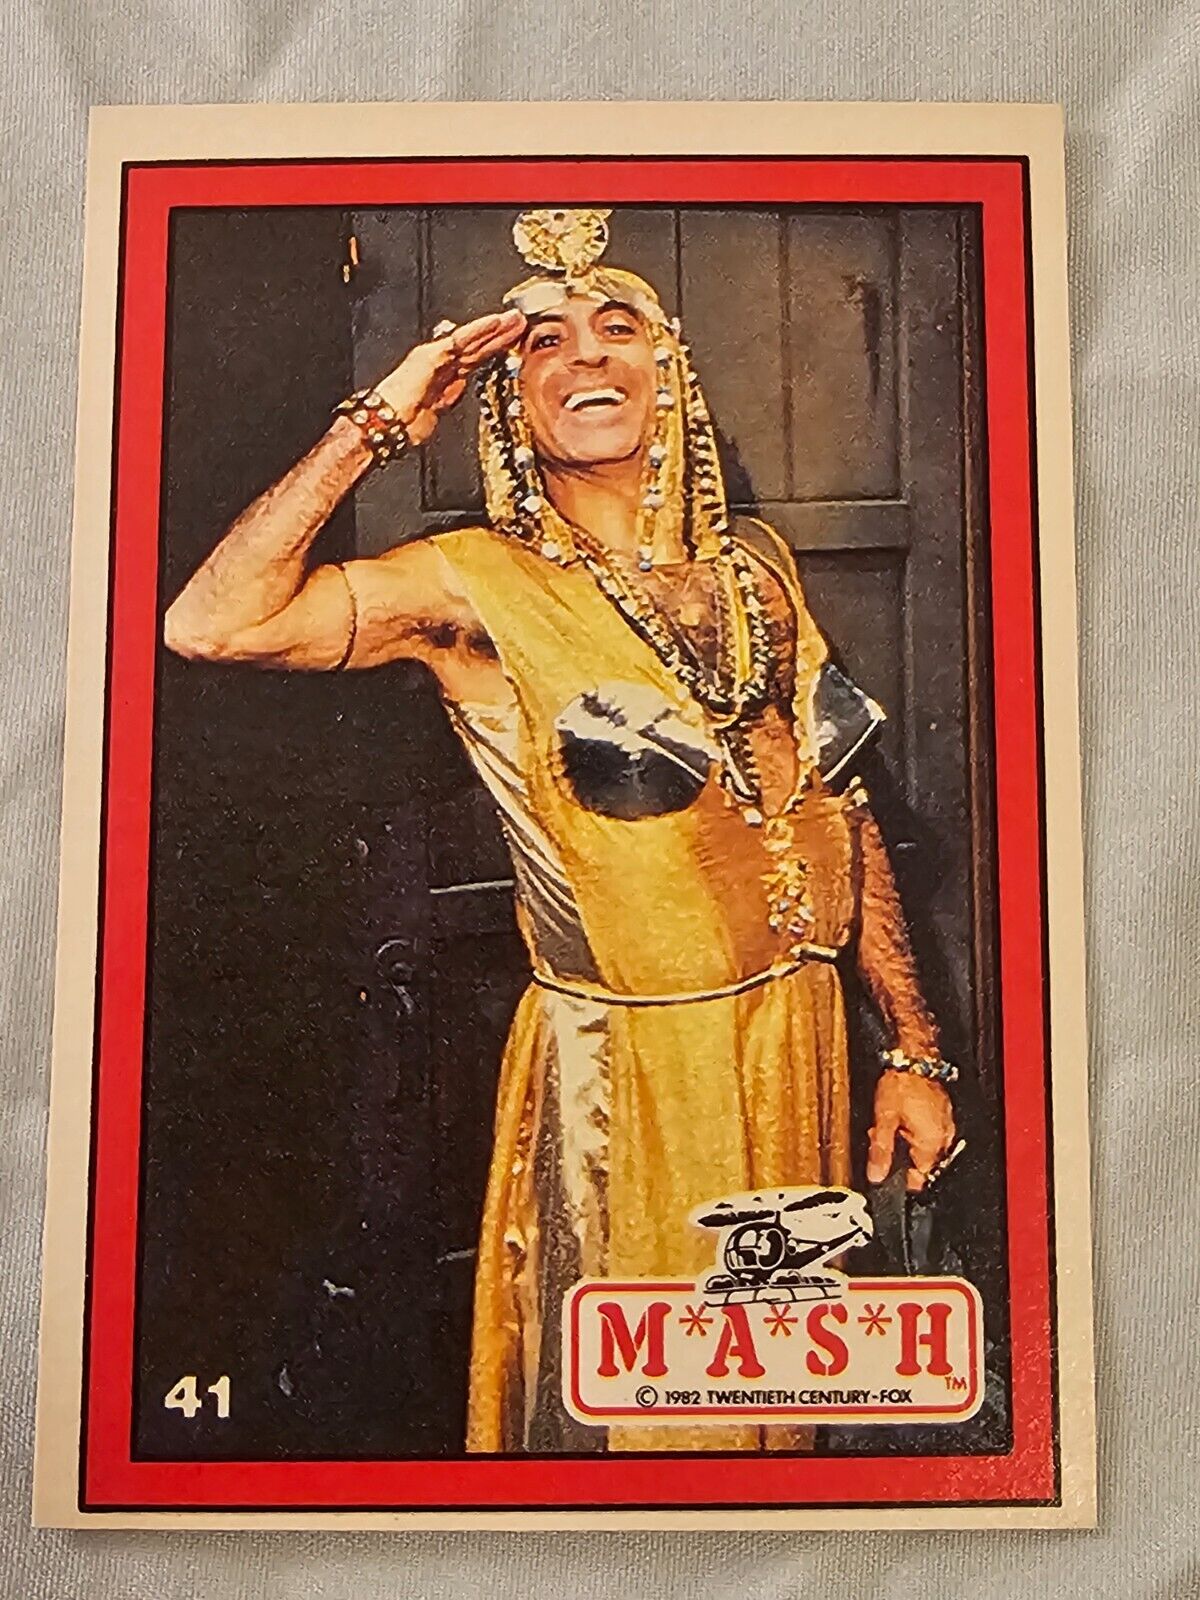 1982 Donruss MASH Trading Card #41